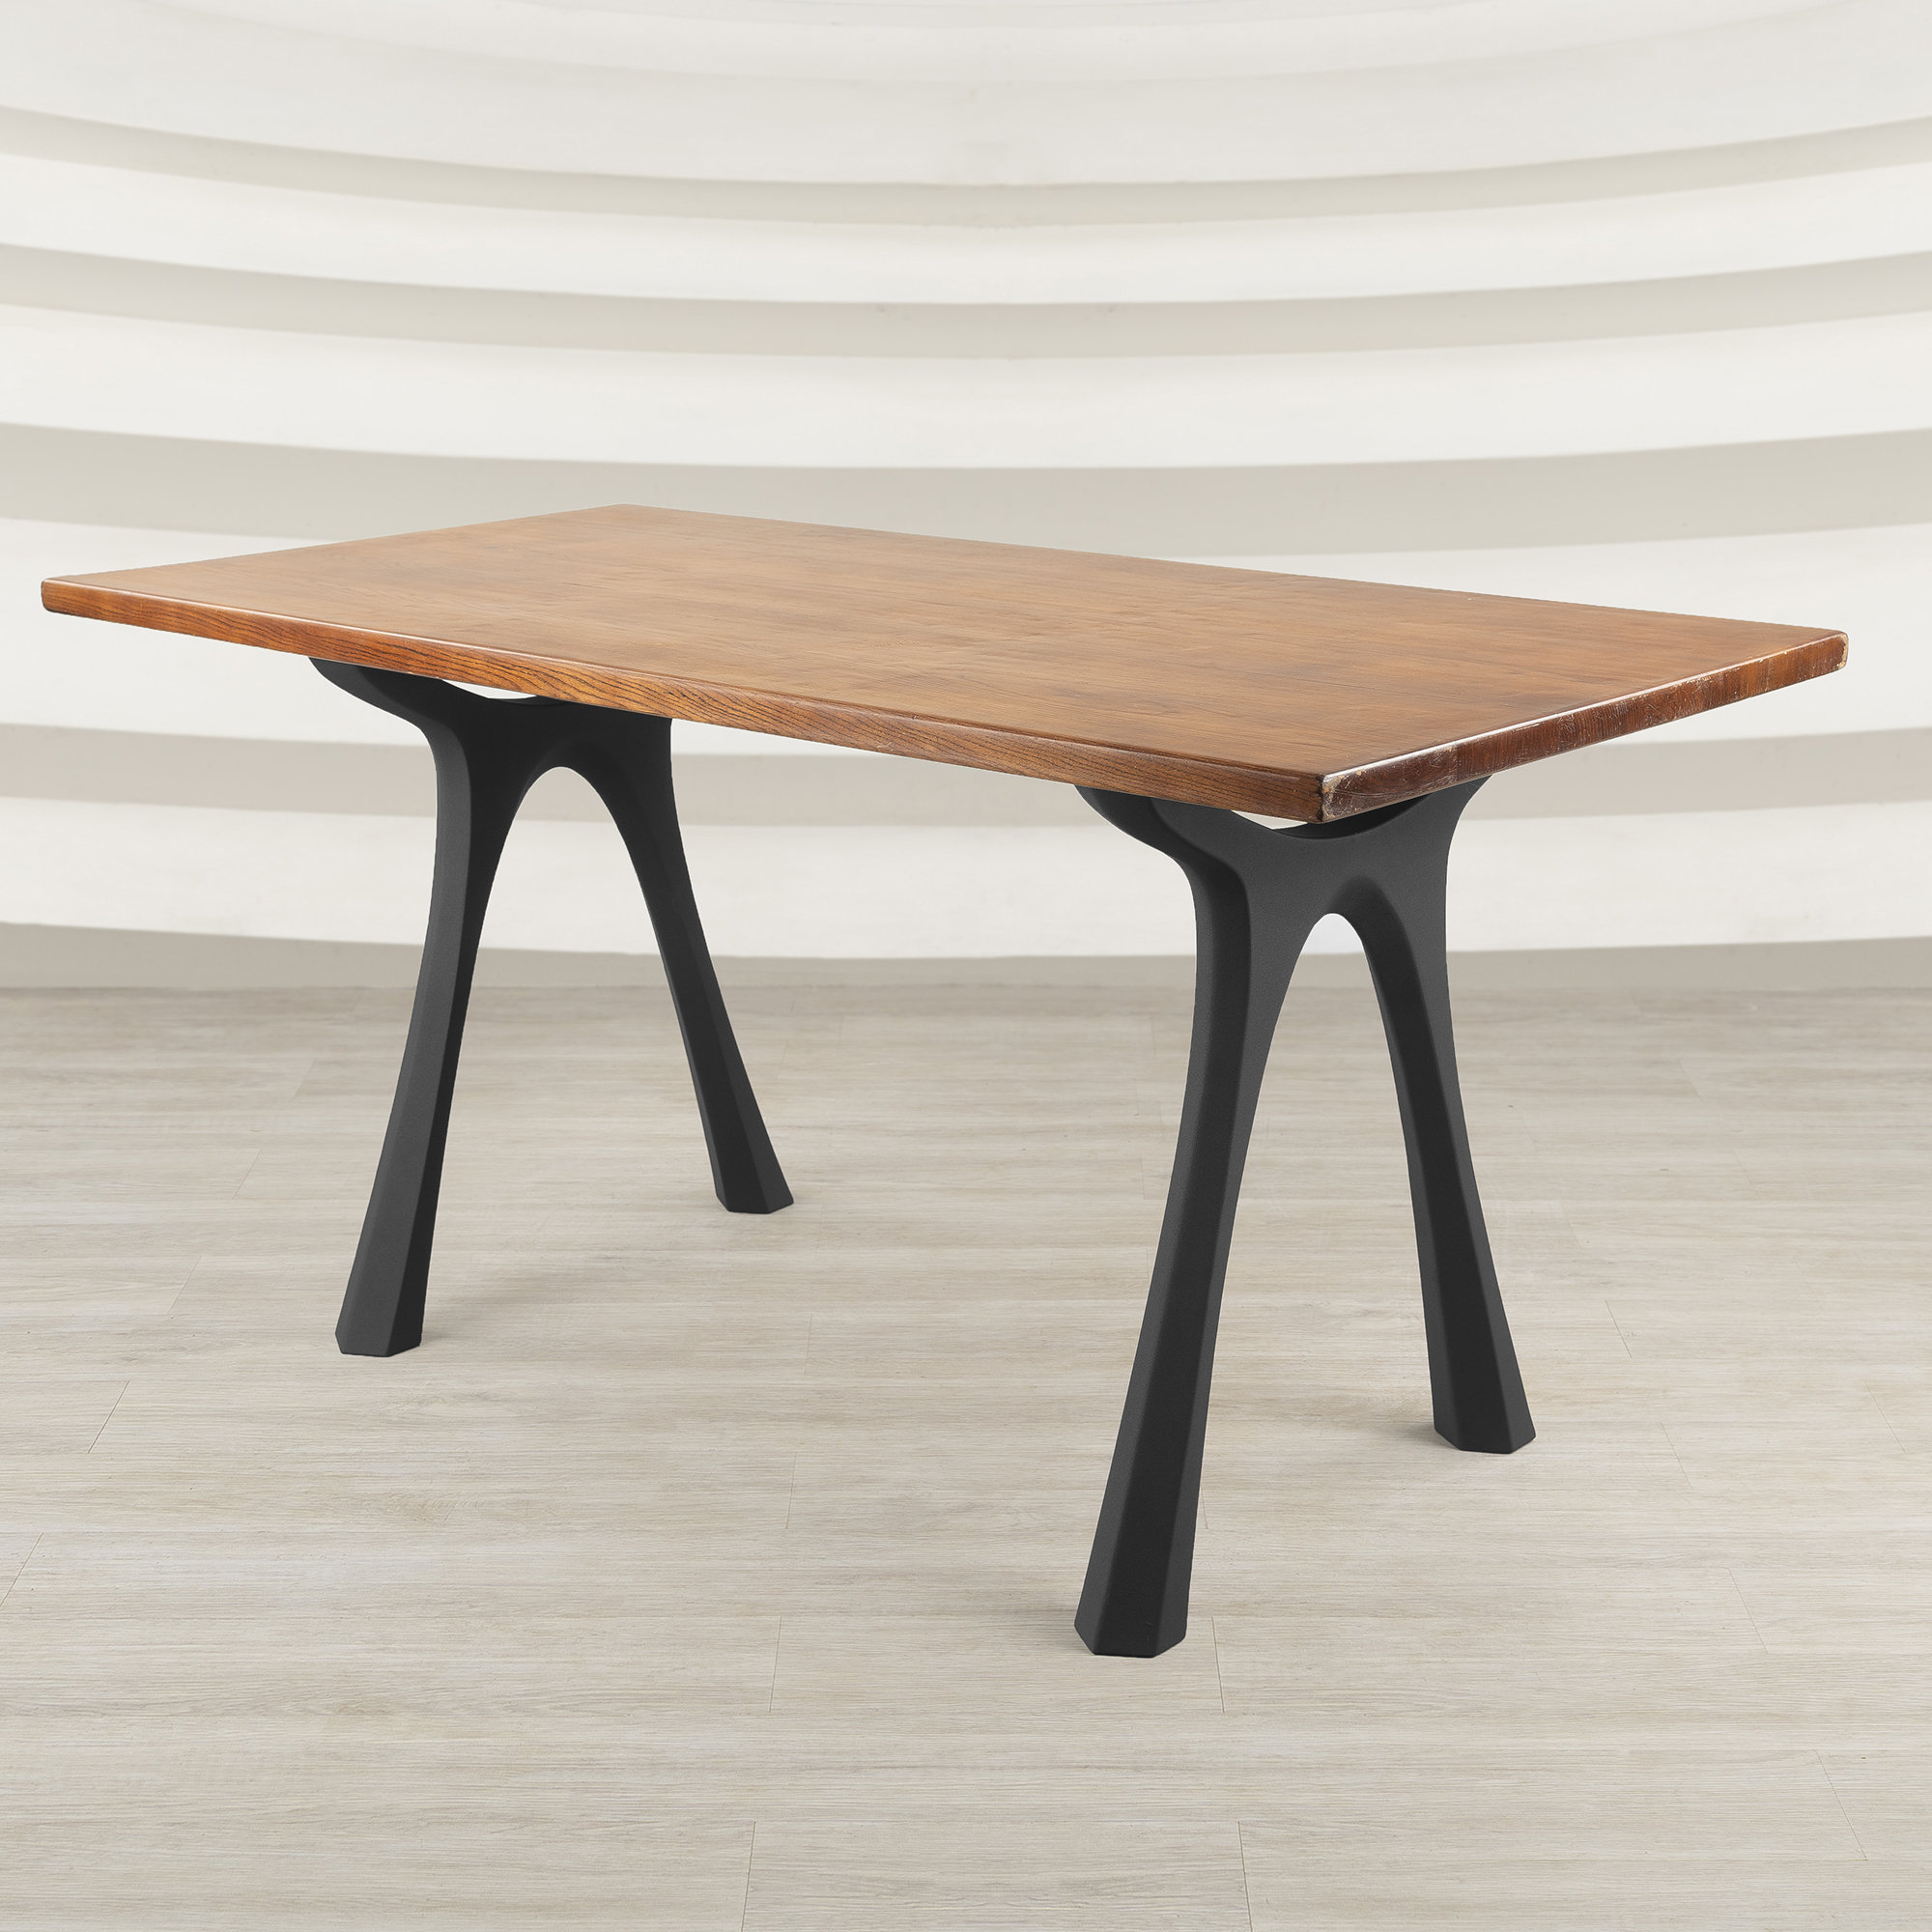 Details about   Metal Table Legs Dining Table Legs Box Shape Desk Legs Set of 2 Modern DIY US 